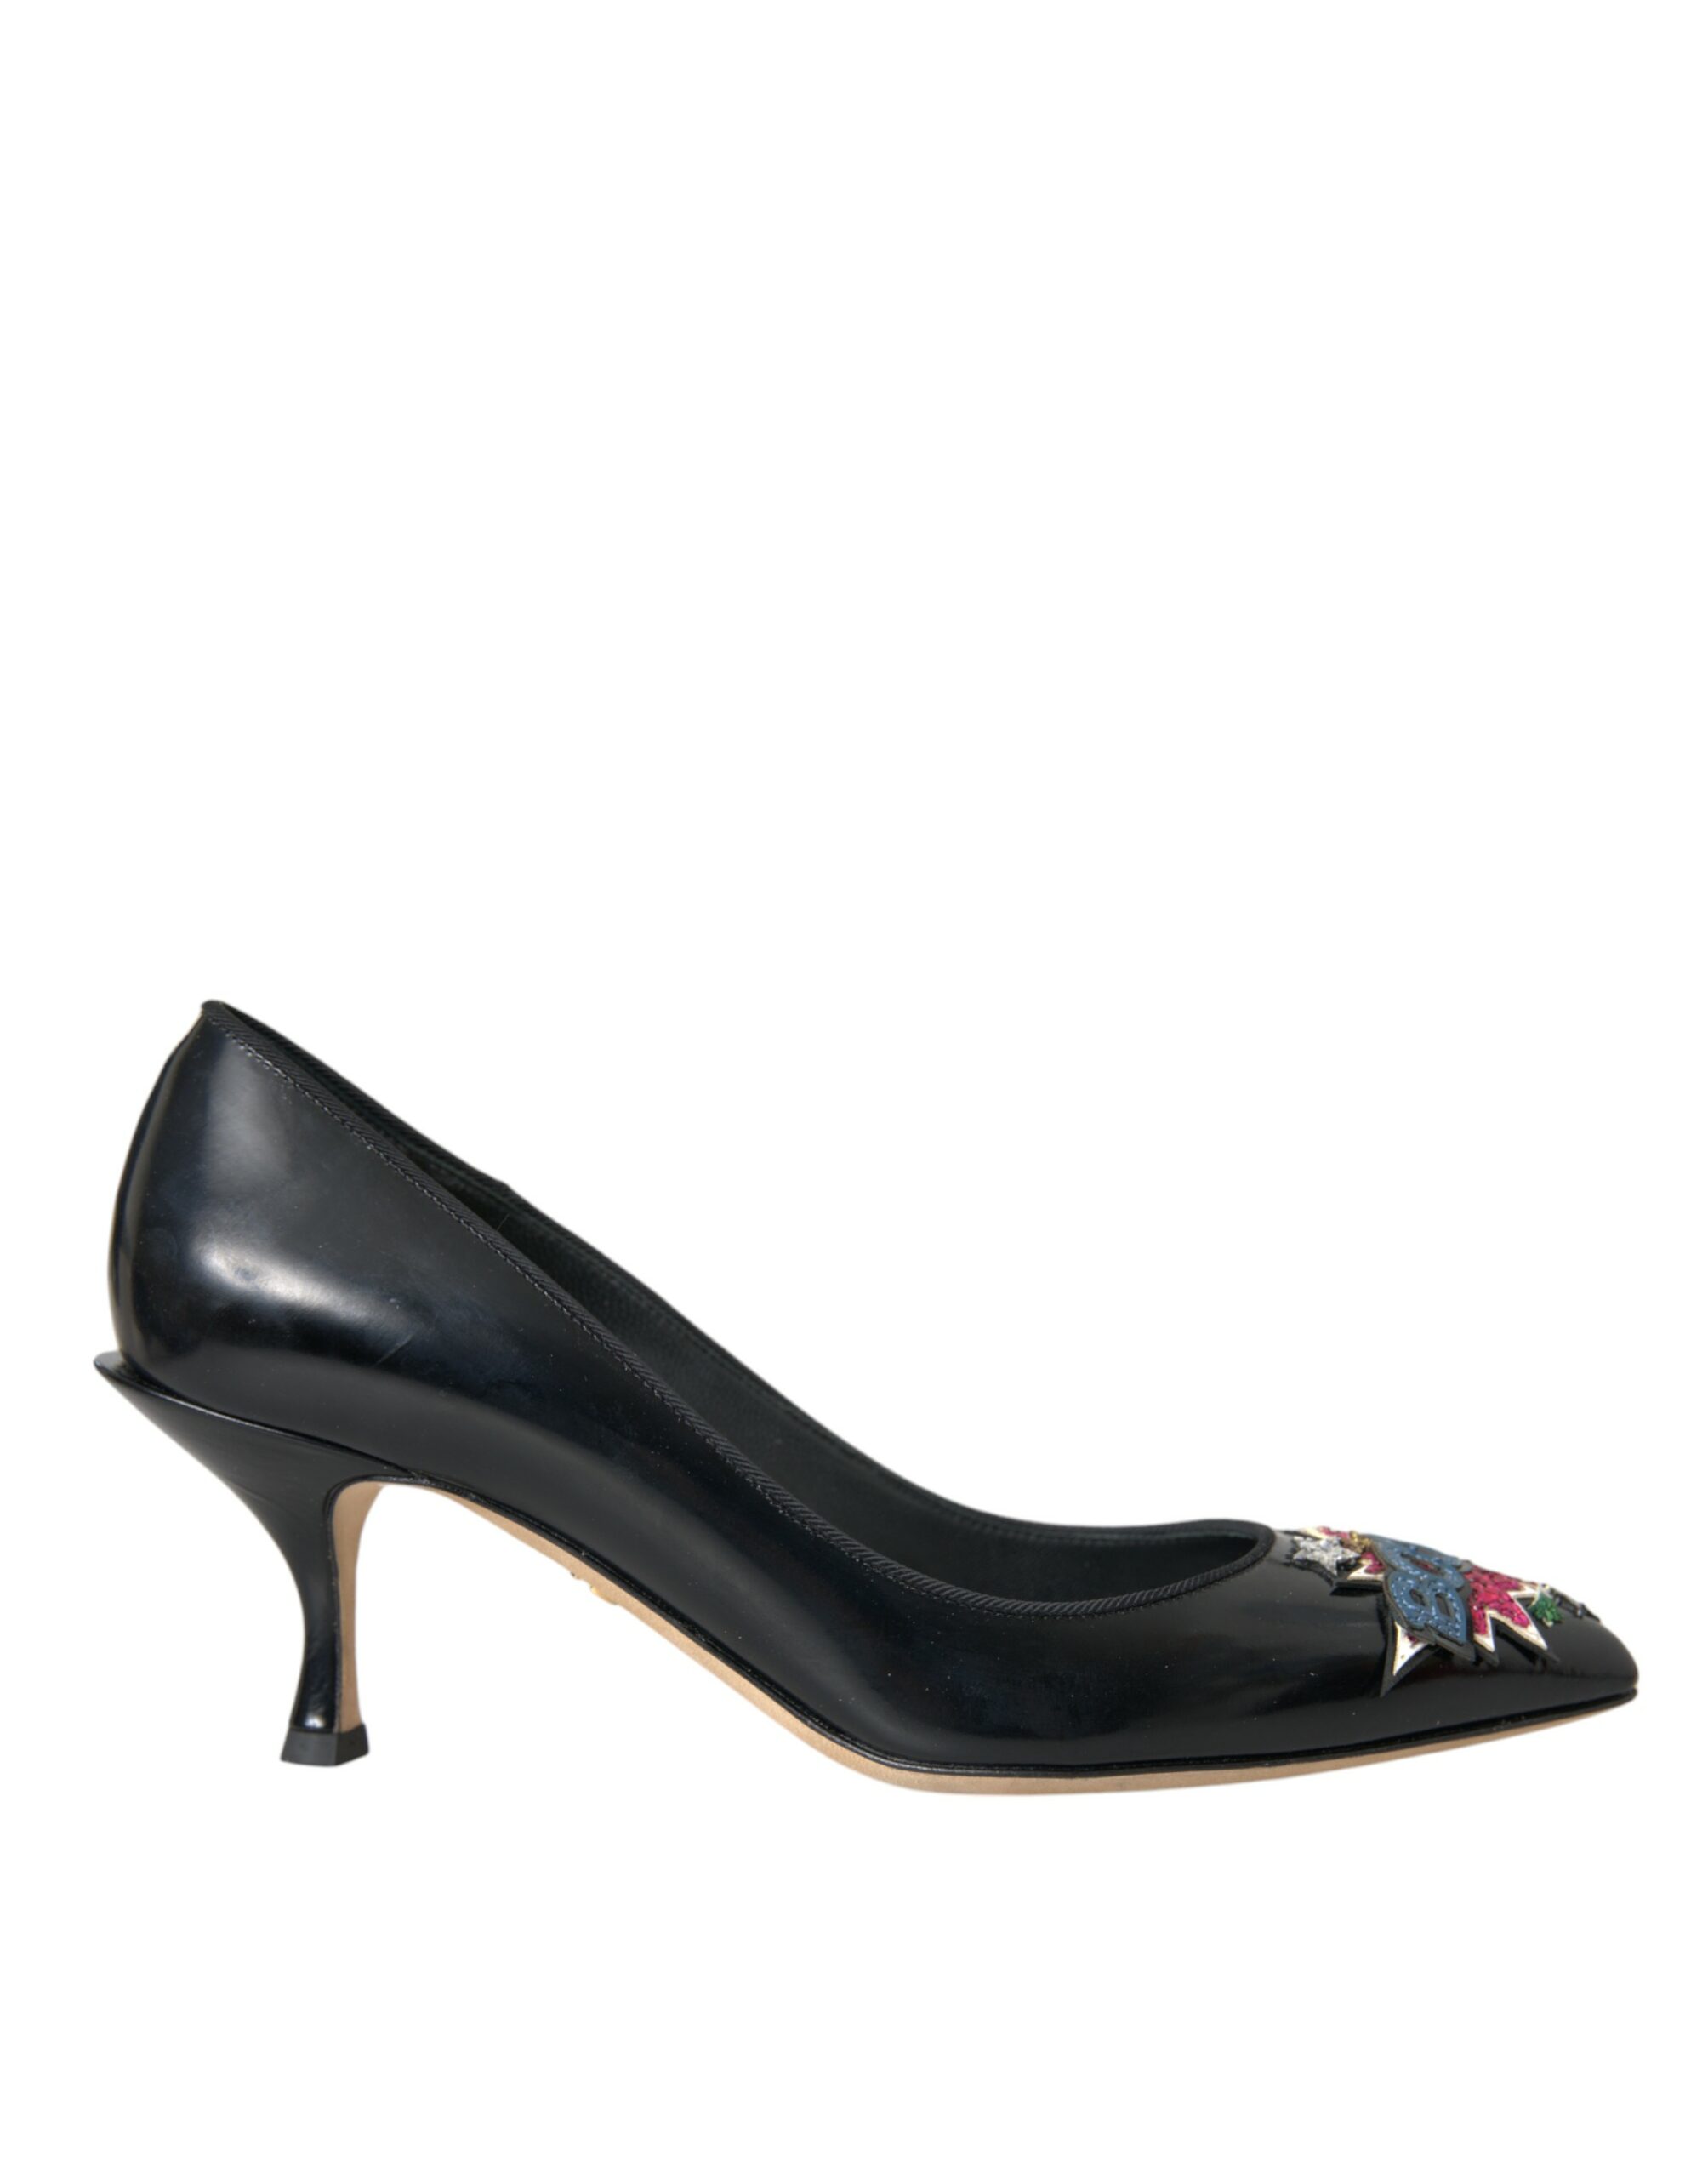 Dolce & Gabbana Black Leather BOOM Patch Heels Pumps Shoes EU39/US8.5 Black